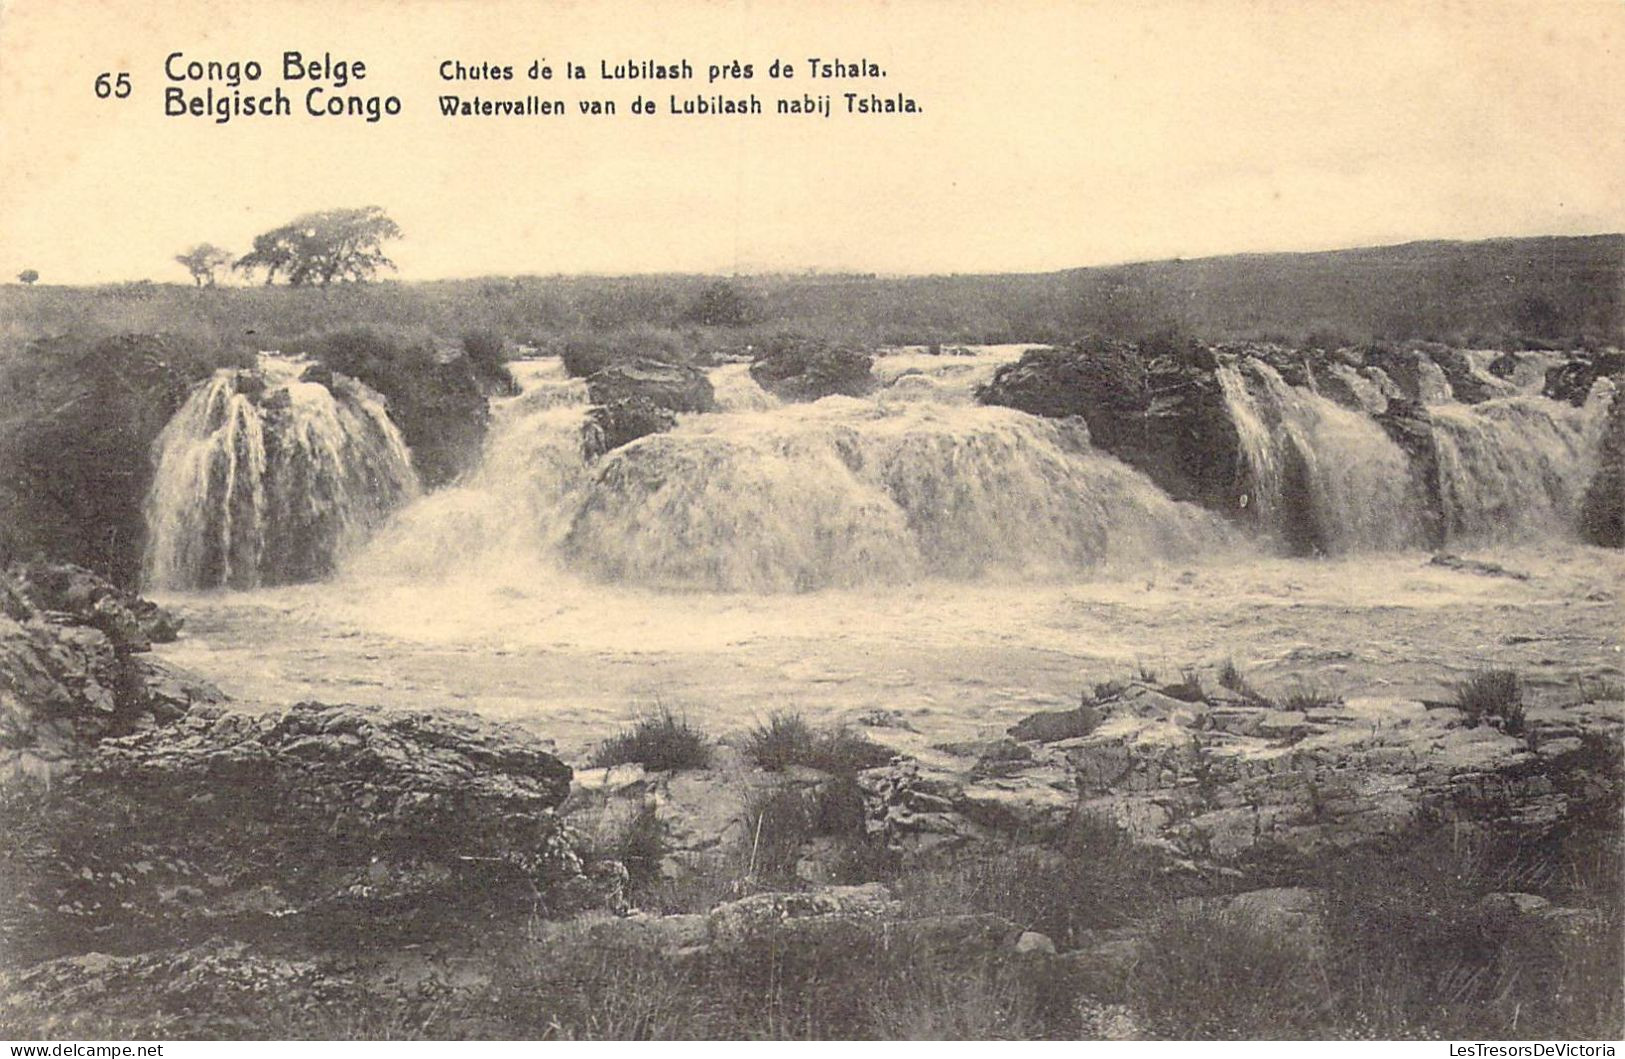 CONGO BELGE - Chutes De La Lubilash Près De Tshala - Carte Postale Ancienne - Congo Belga